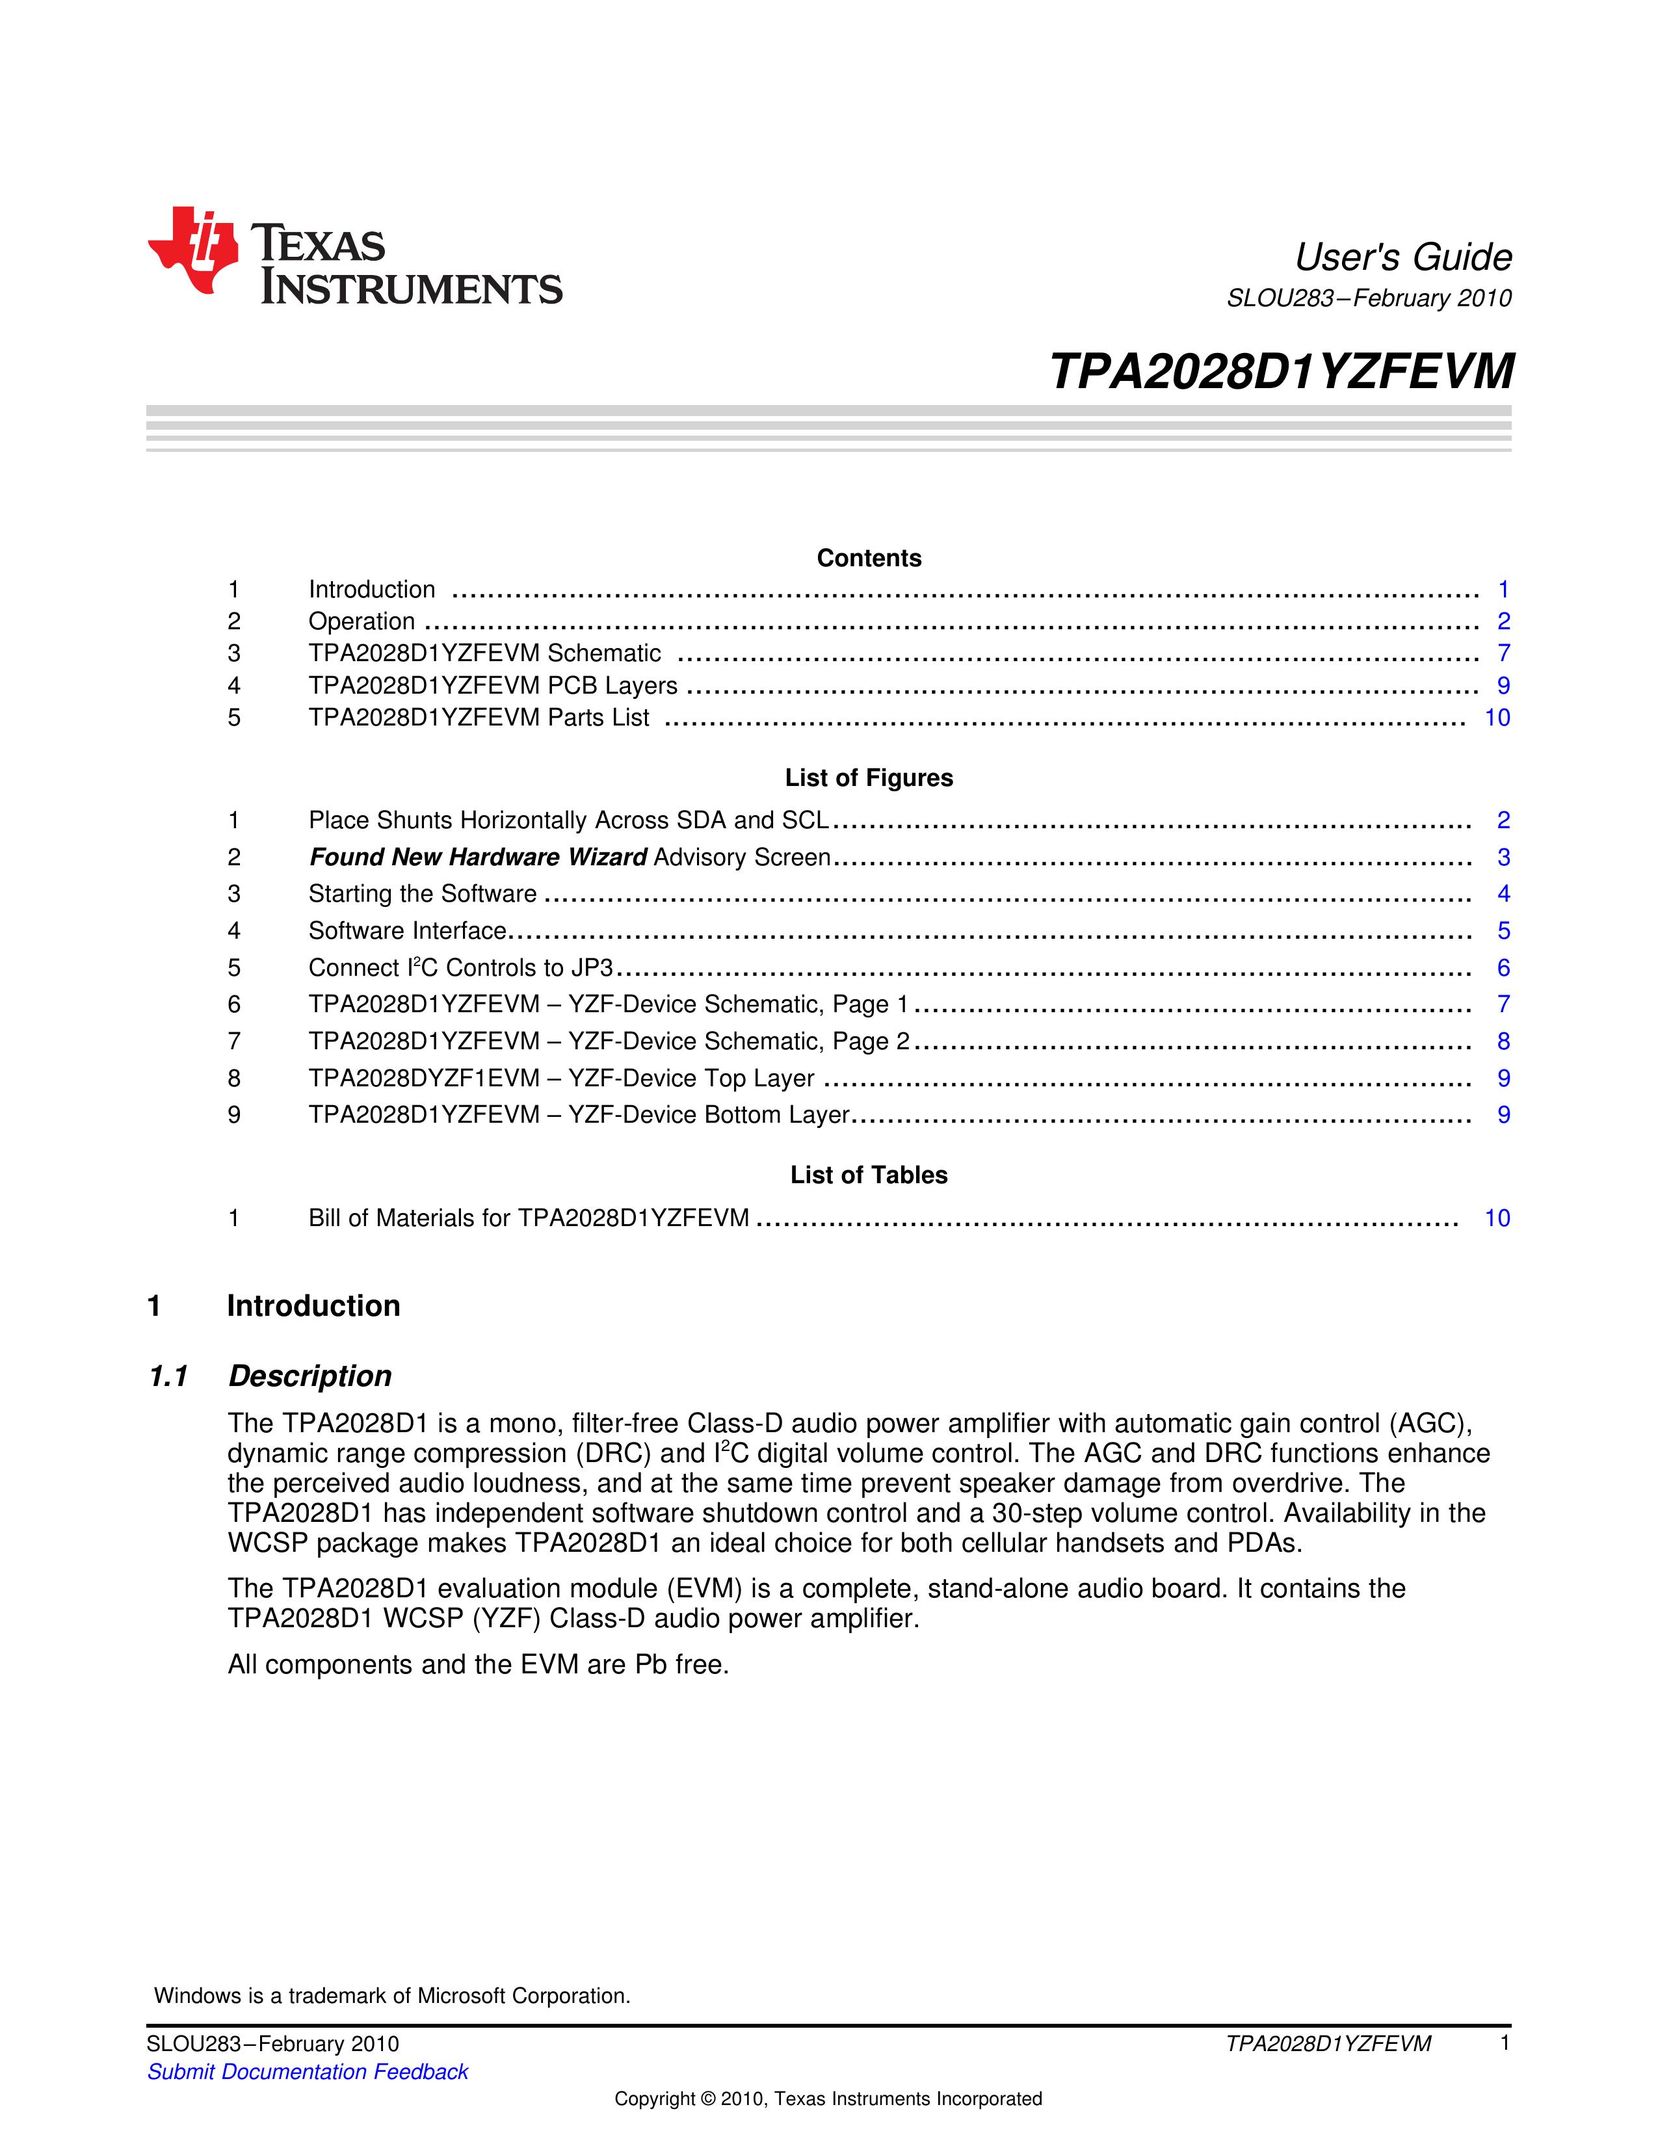 Texas Instruments TPA2028D1YZFEVM Car Amplifier User Manual